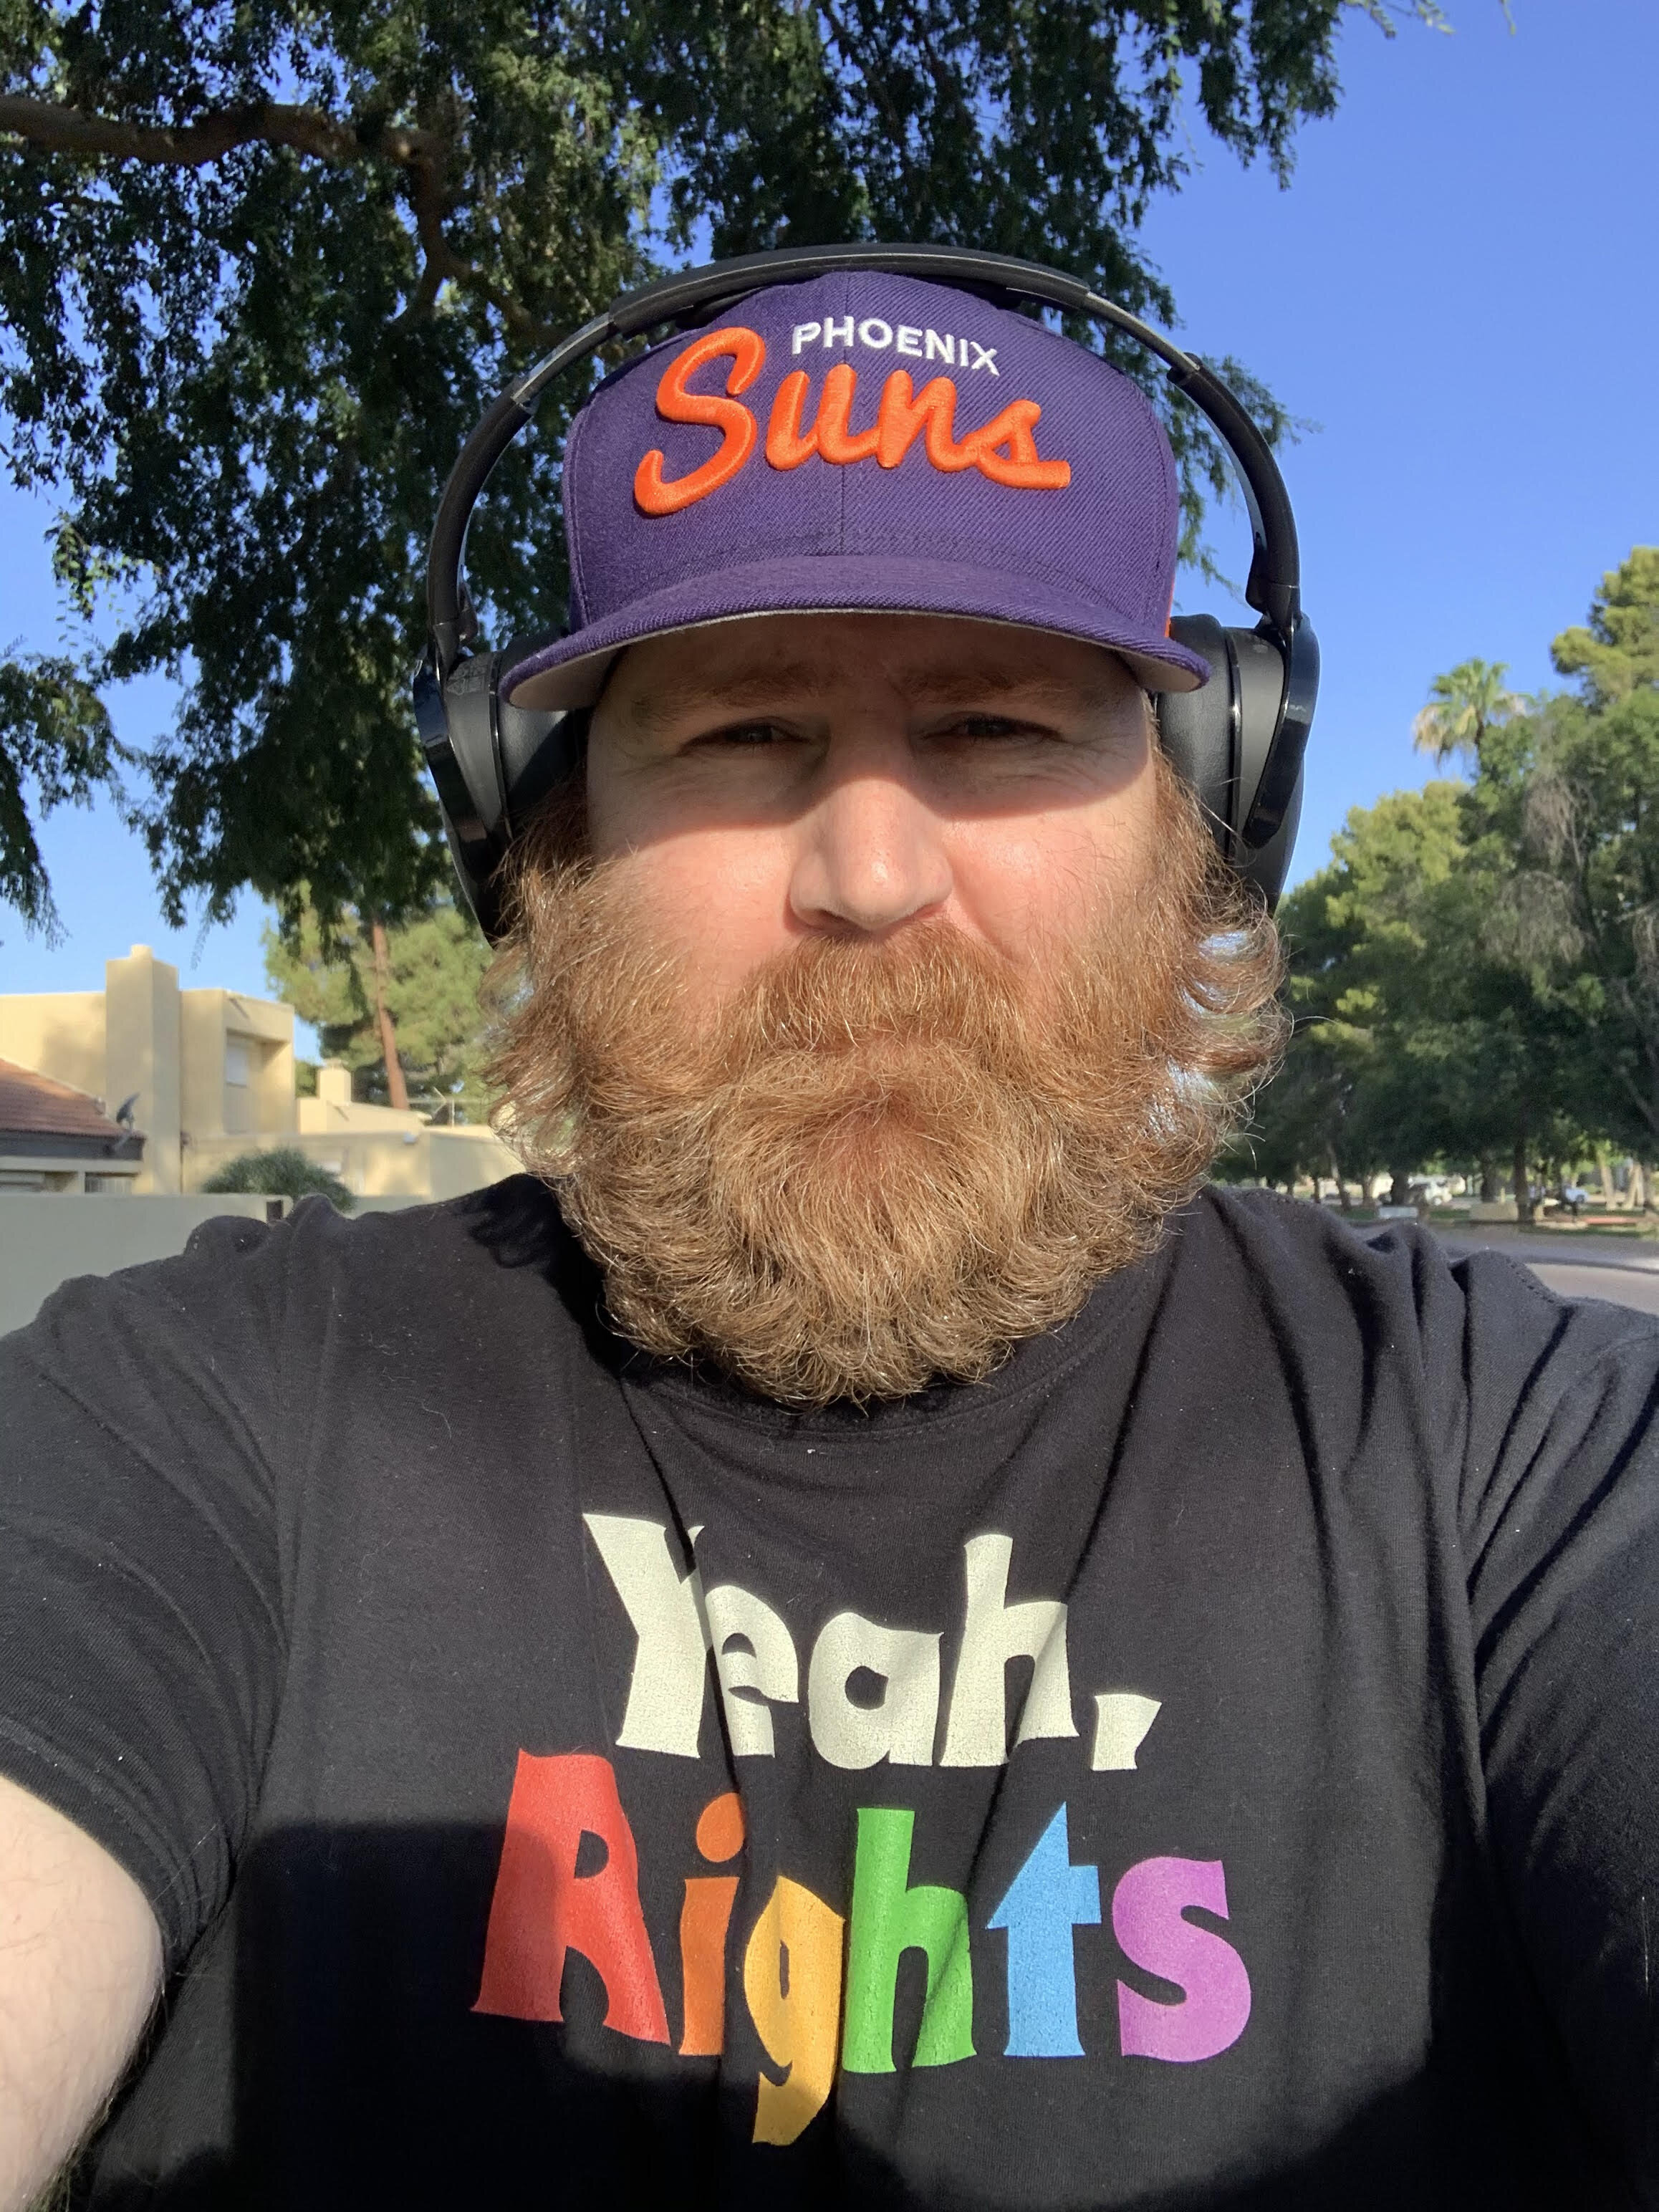 phoenix-suns-hat-equal-rights-shirt